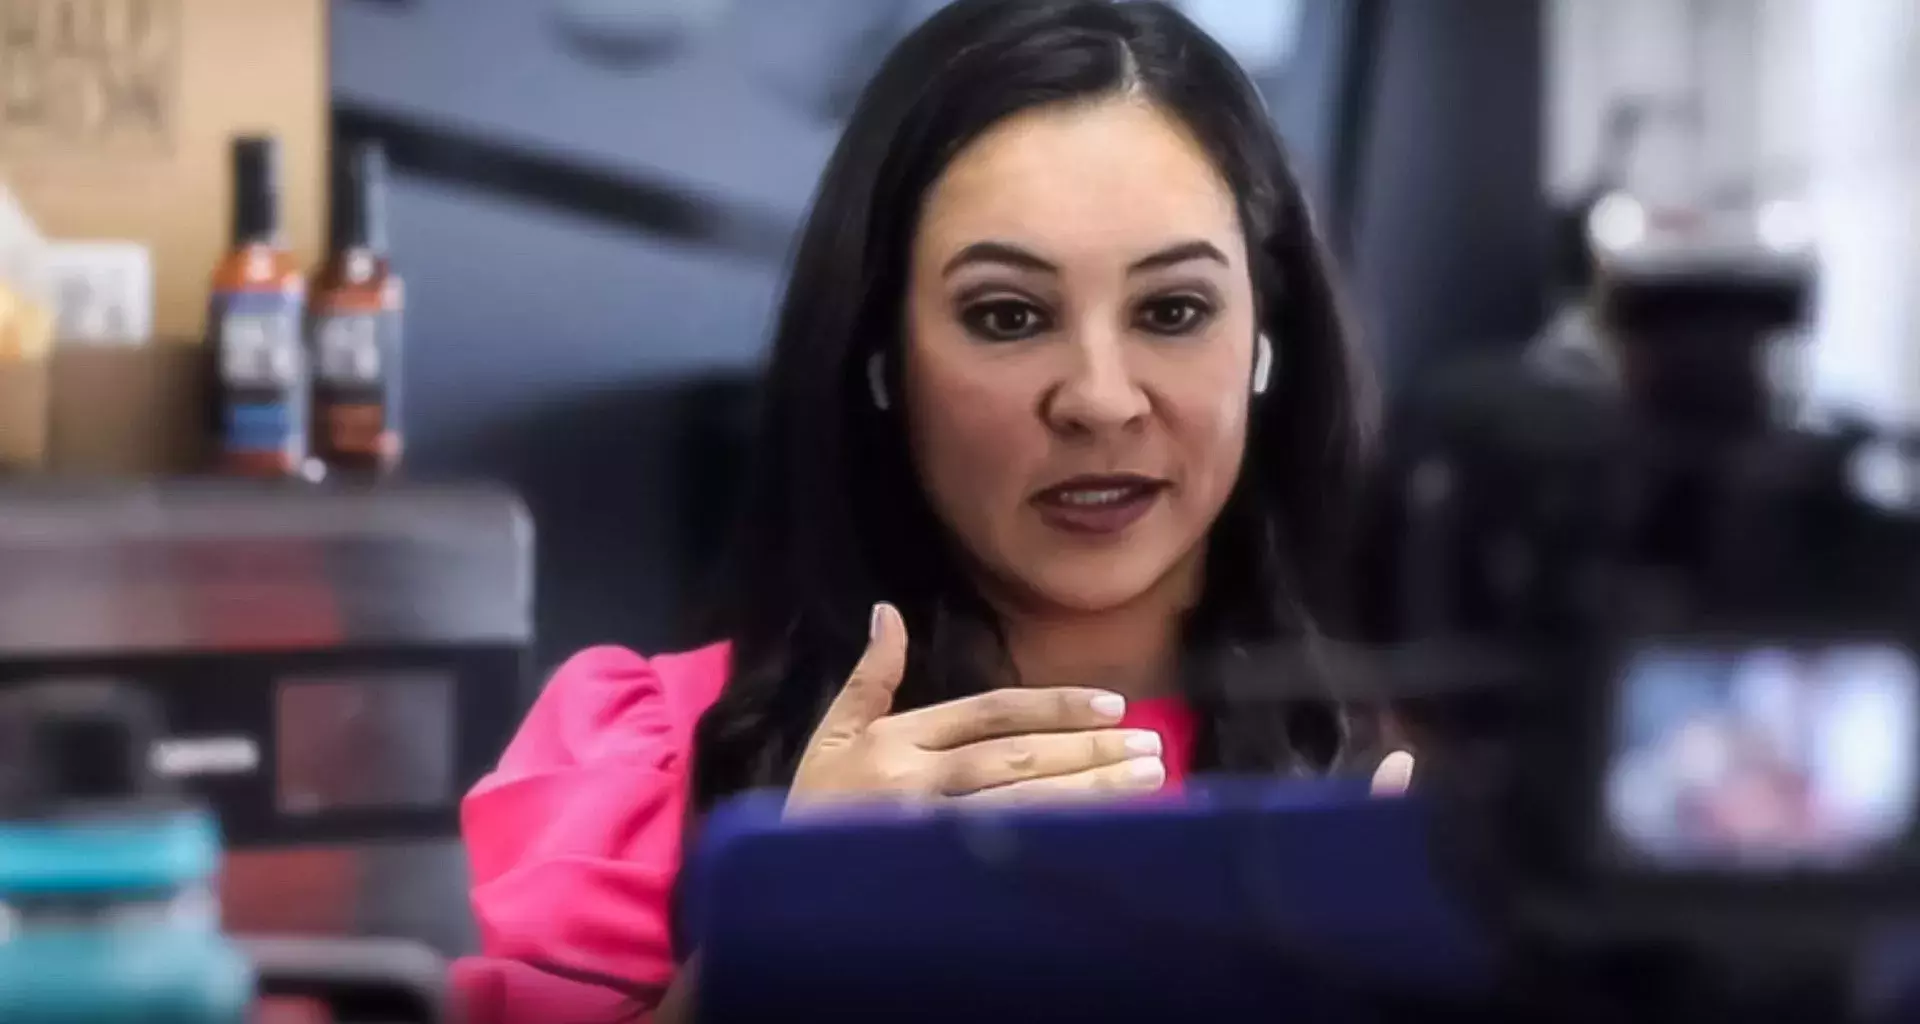 The Mexican female entrepreneur who surprised Joe Biden